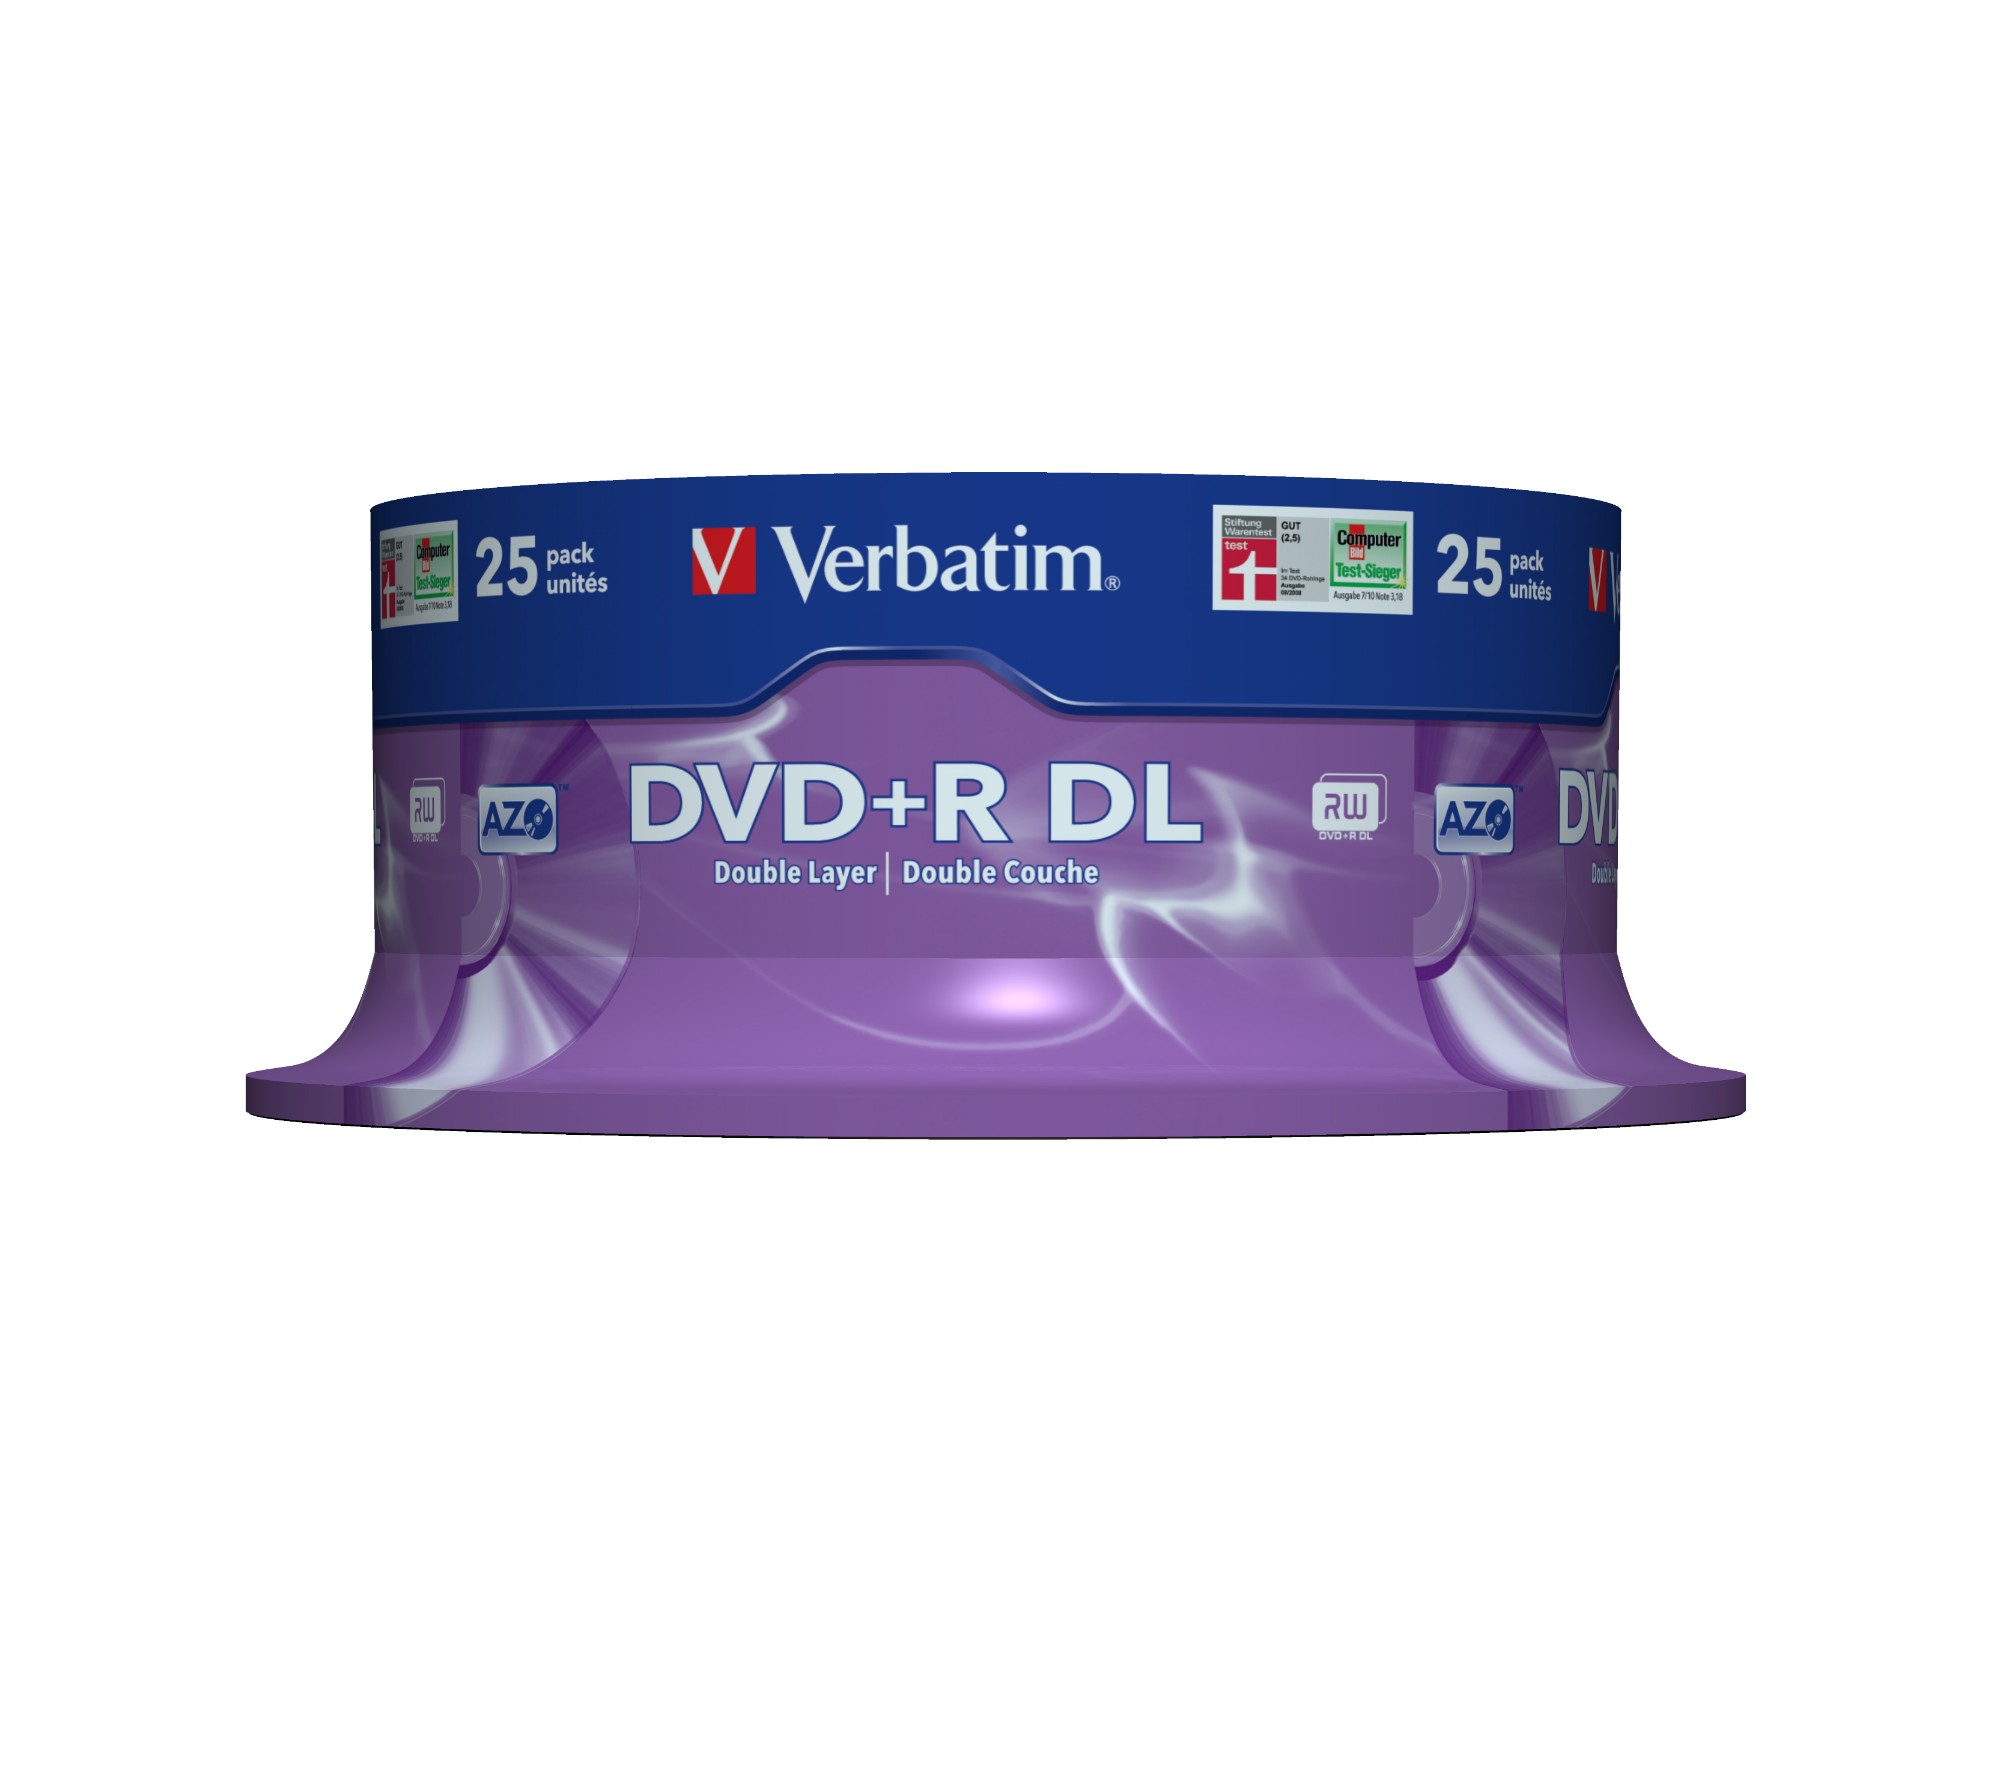 Verbatim DVD+R Double Layer 8x Matt Silver 25pk Spindle